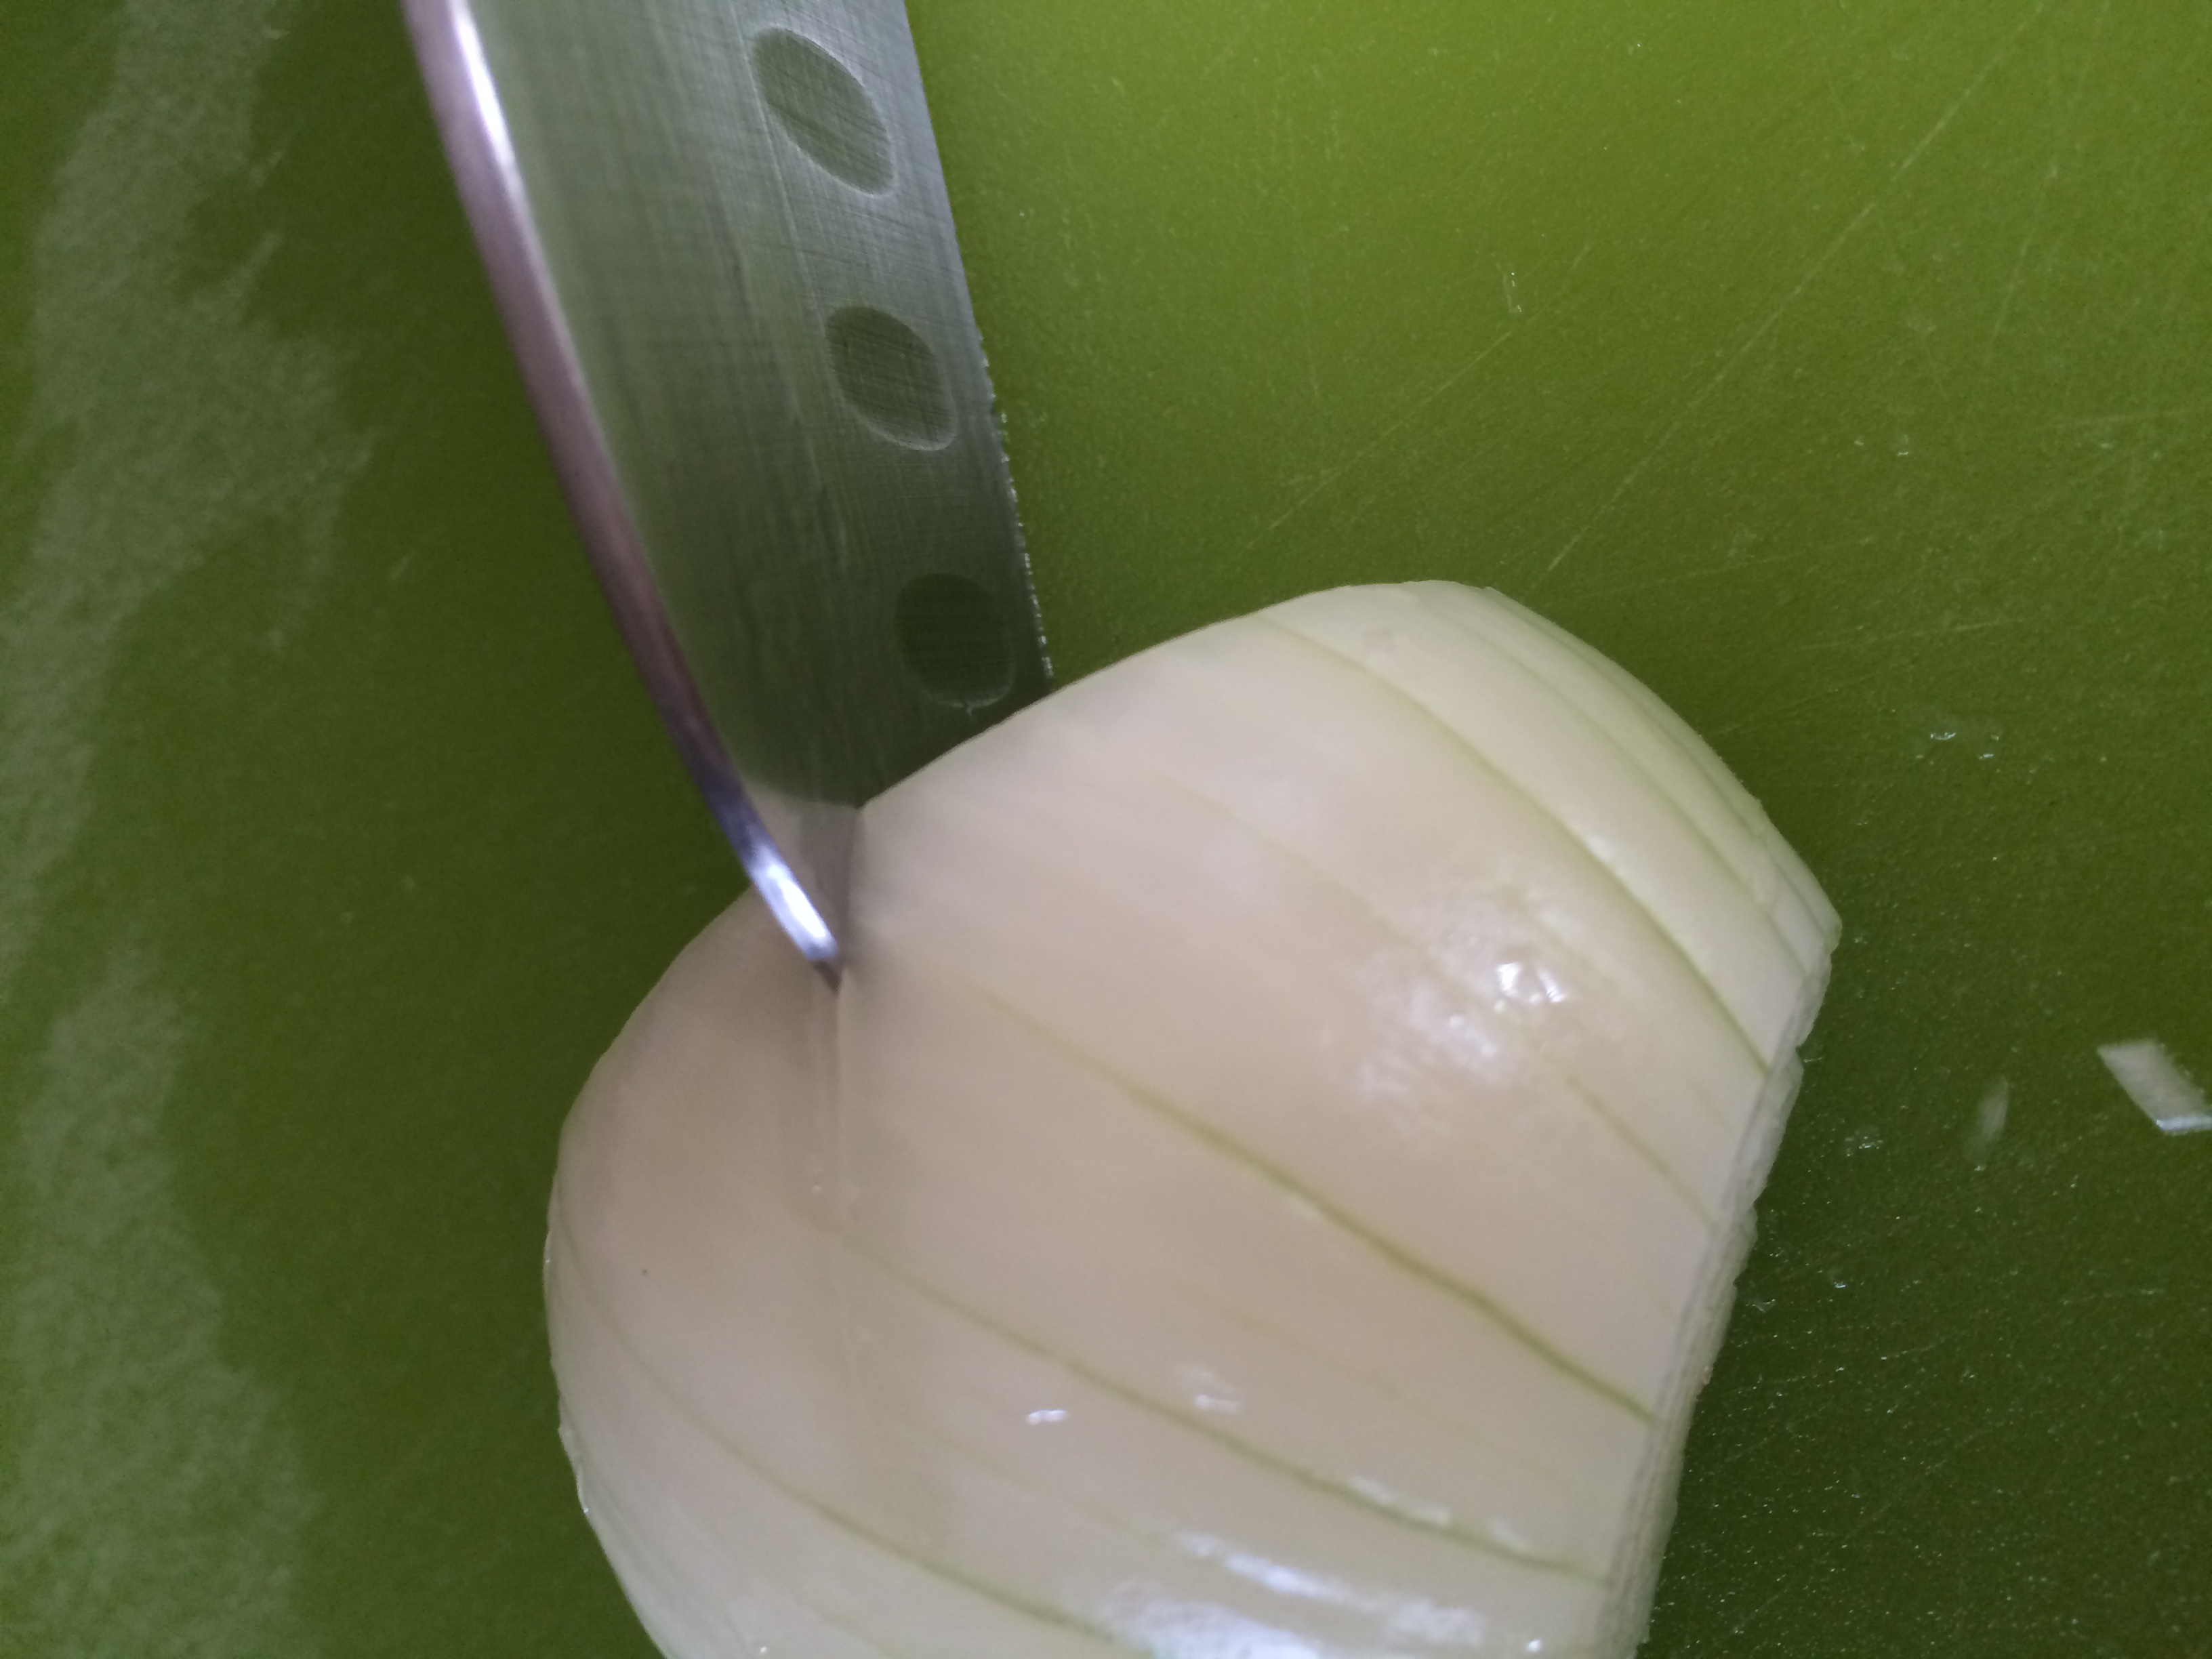 Onion being sliced with a santoku knife